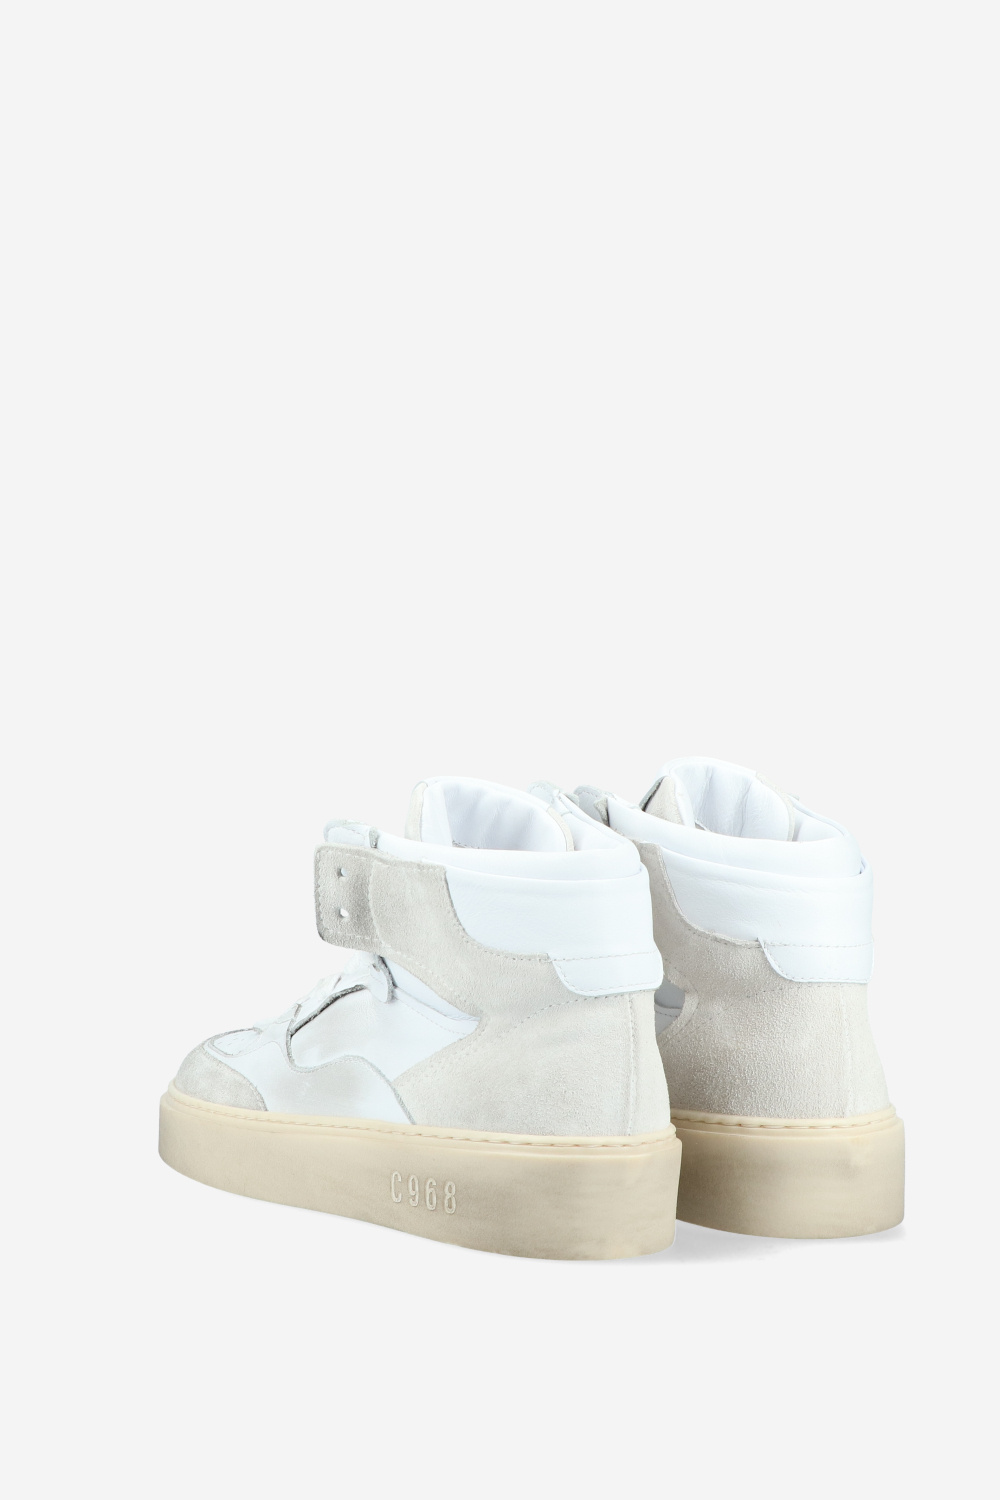 C968 Sneakers White